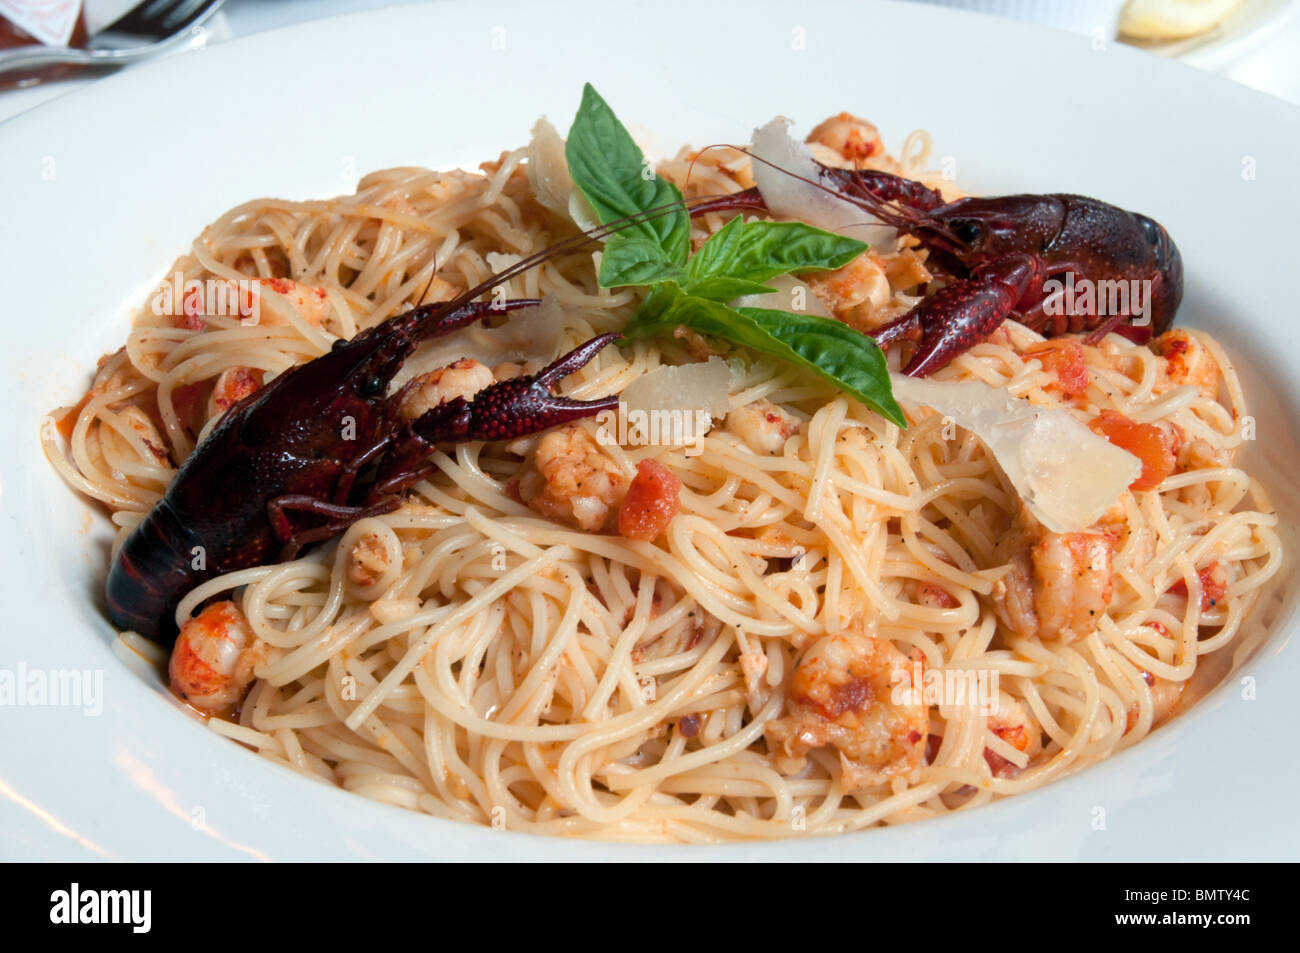 Crawfish Pomodoro pasta - Louisiana crawfish tails, tomatoes, fresh basil and garlic tossed with capellini. A Cajun recipe. Stock Photo